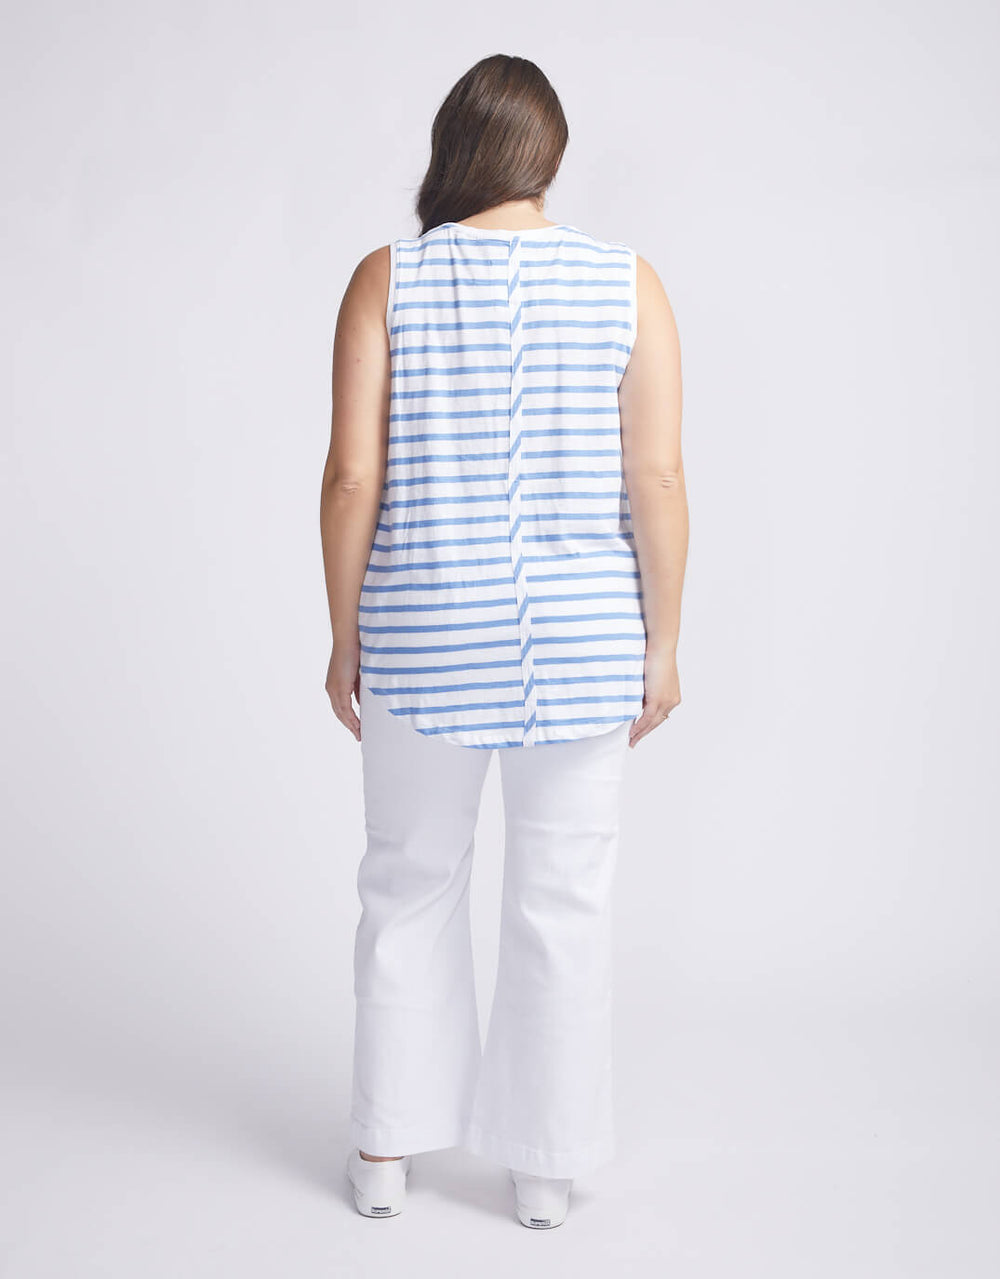 elm-embrace-plus-size-scoop-tank-cornflower-blue-white-stripe-plus-size-clothing